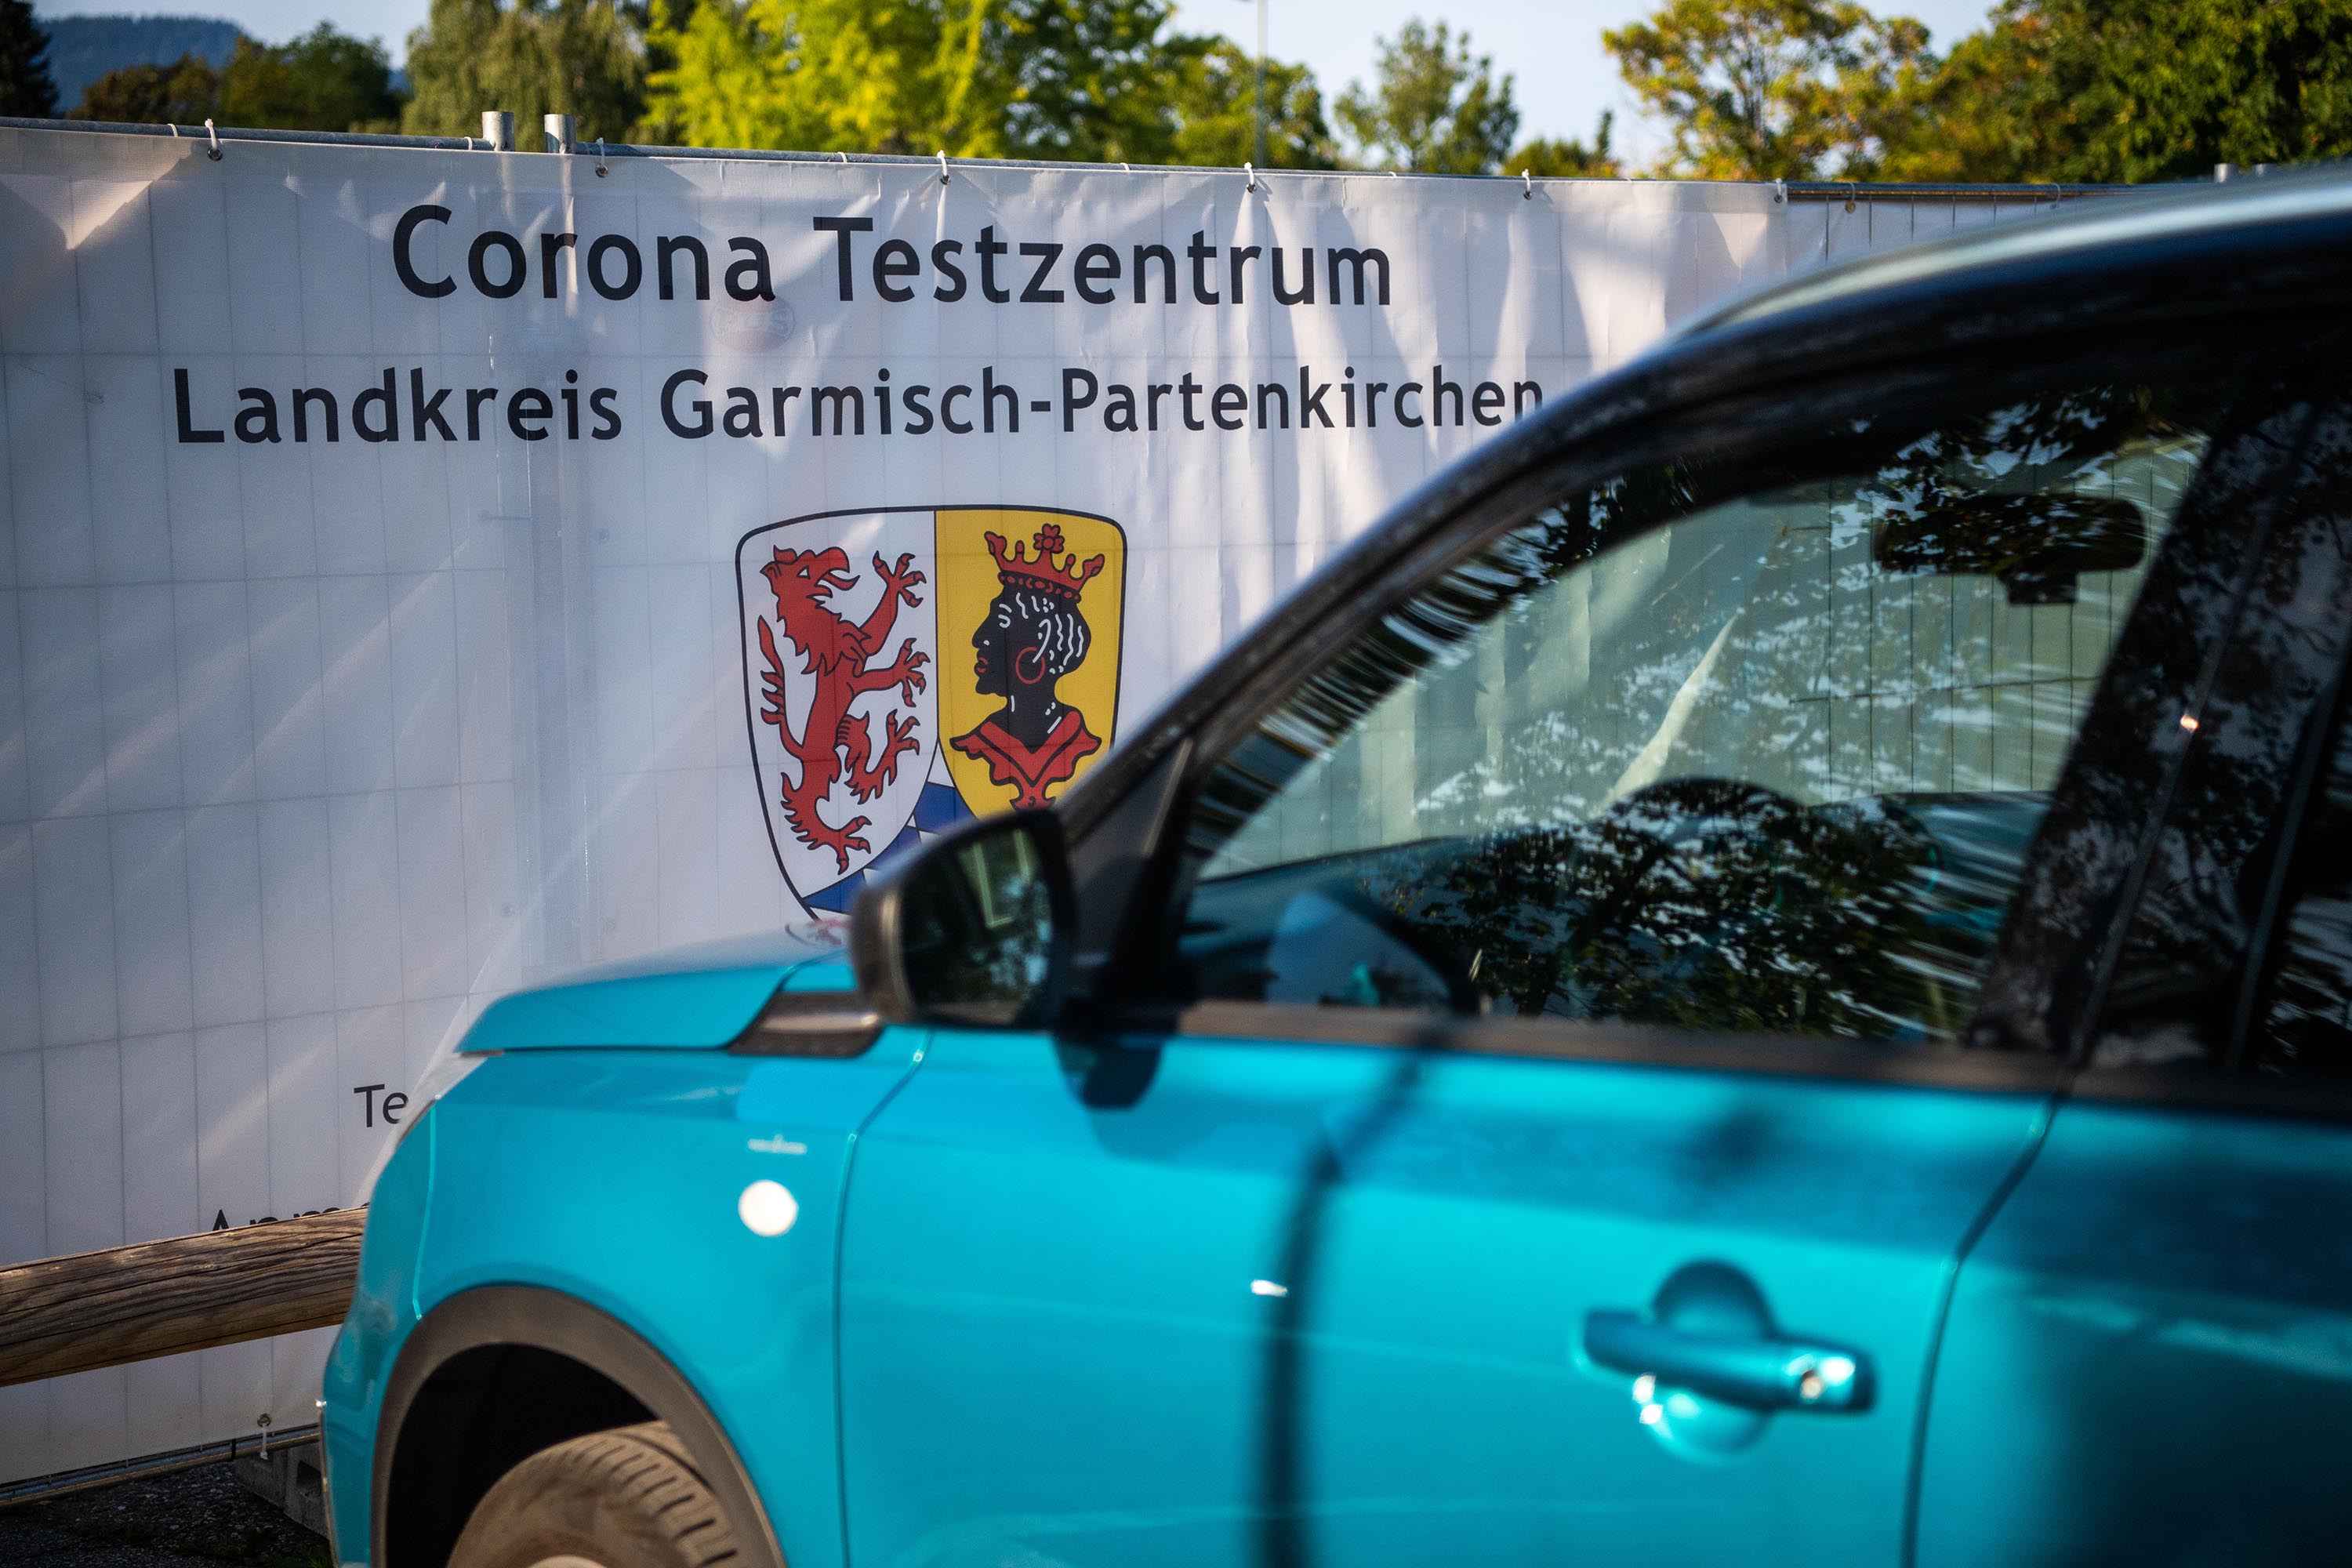 A coronavirus testing center is pictured in Garmisch-Partenkirchen, in Bavaria, Germany, on September 13.